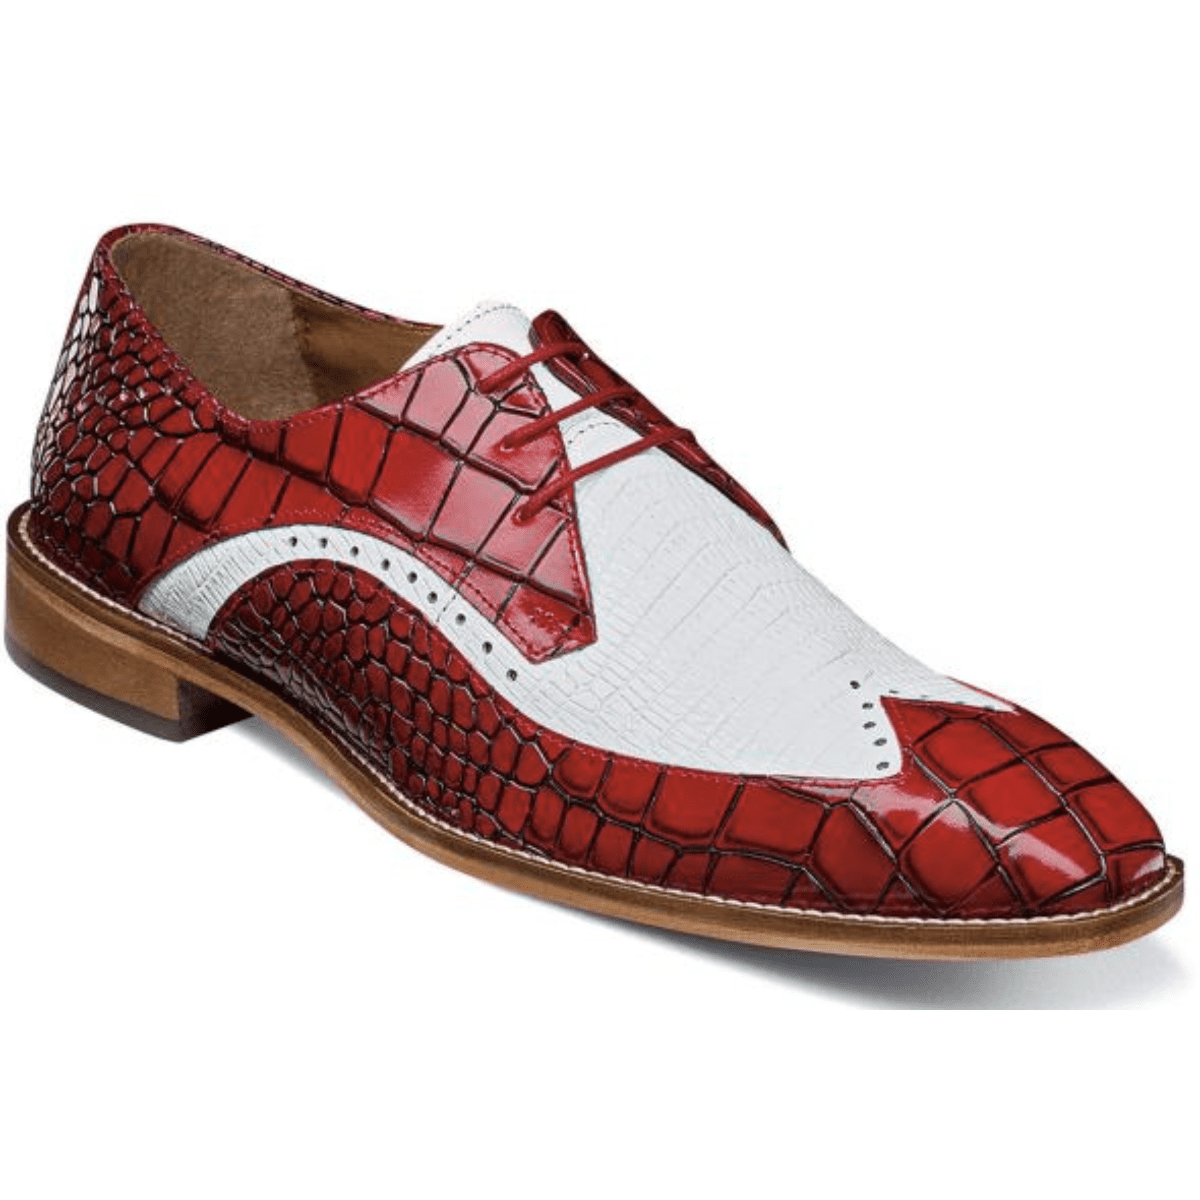 Stacy Adams Trazino Men Shoes Oxford White Red Crocodile Print Leather